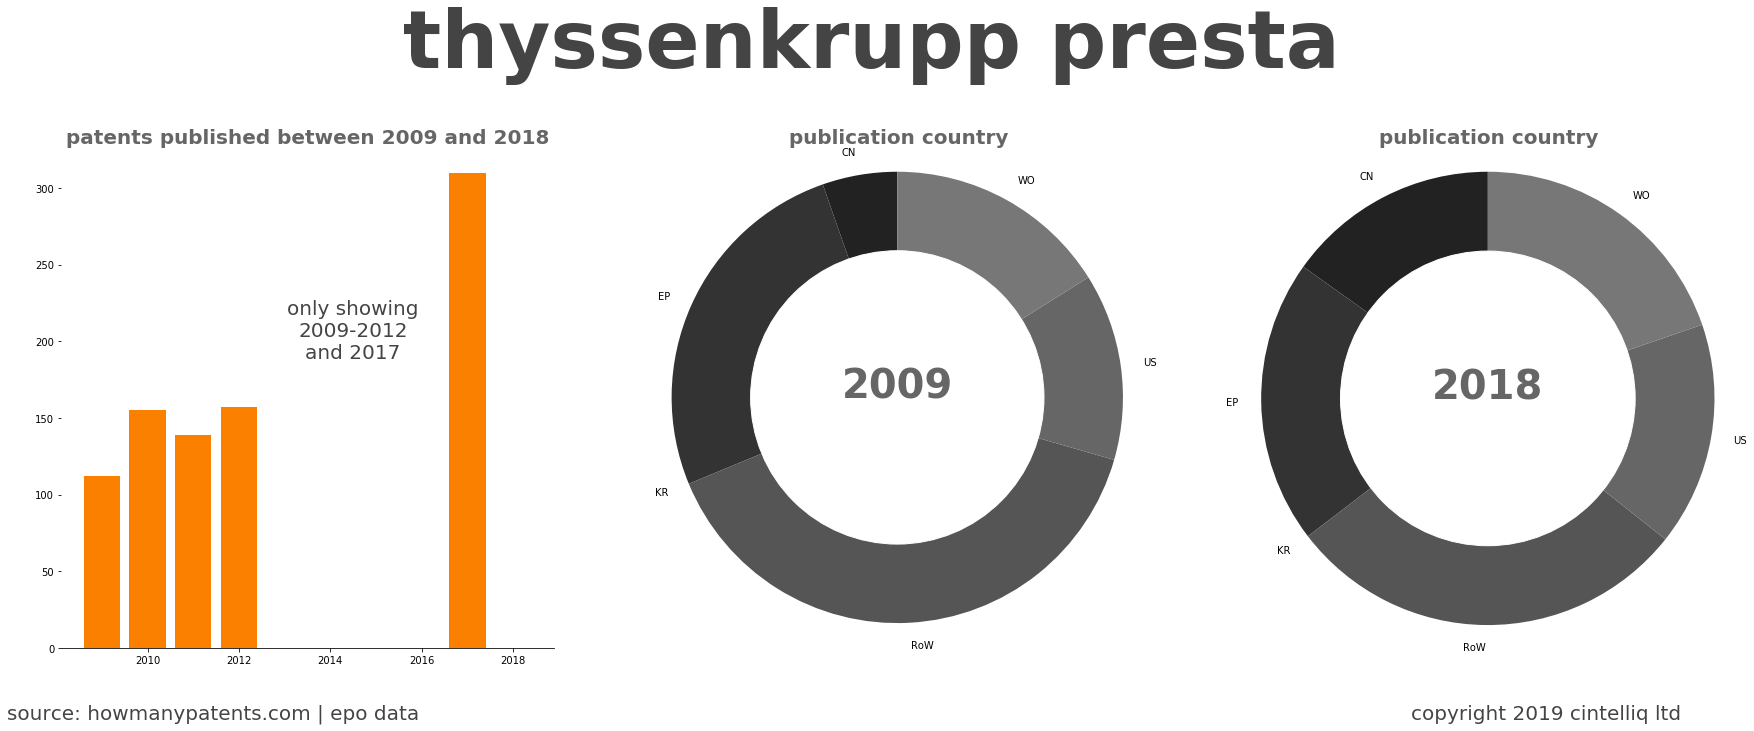 summary of patents for Thyssenkrupp Presta